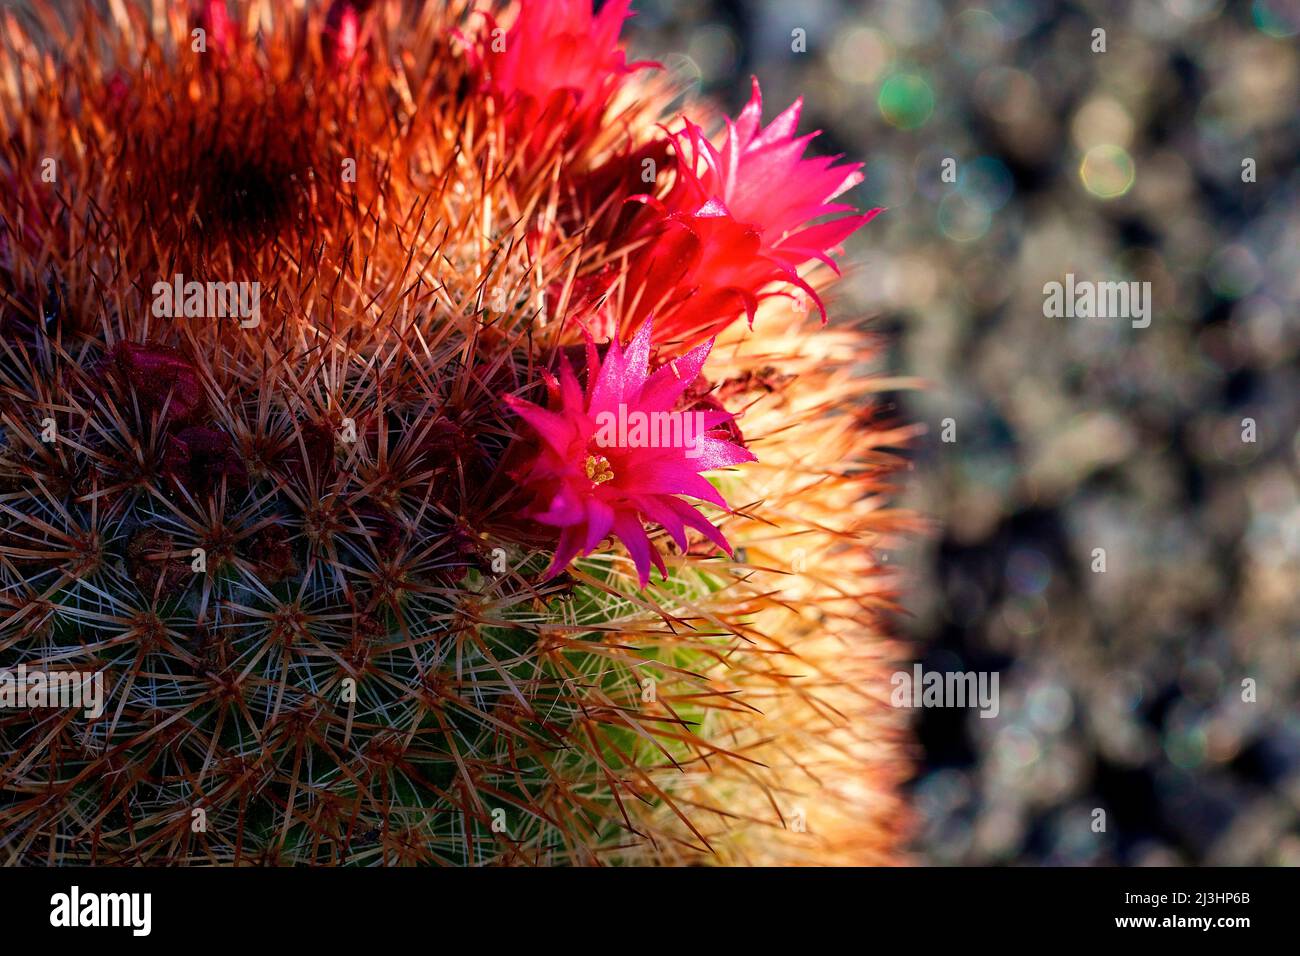 Canary Islands, Lanzarote, volcanic island, Jardin de Cactus, cactus garden, designed by Cesar Manrique, macro shot of a cactus with red flowers Stock Photo